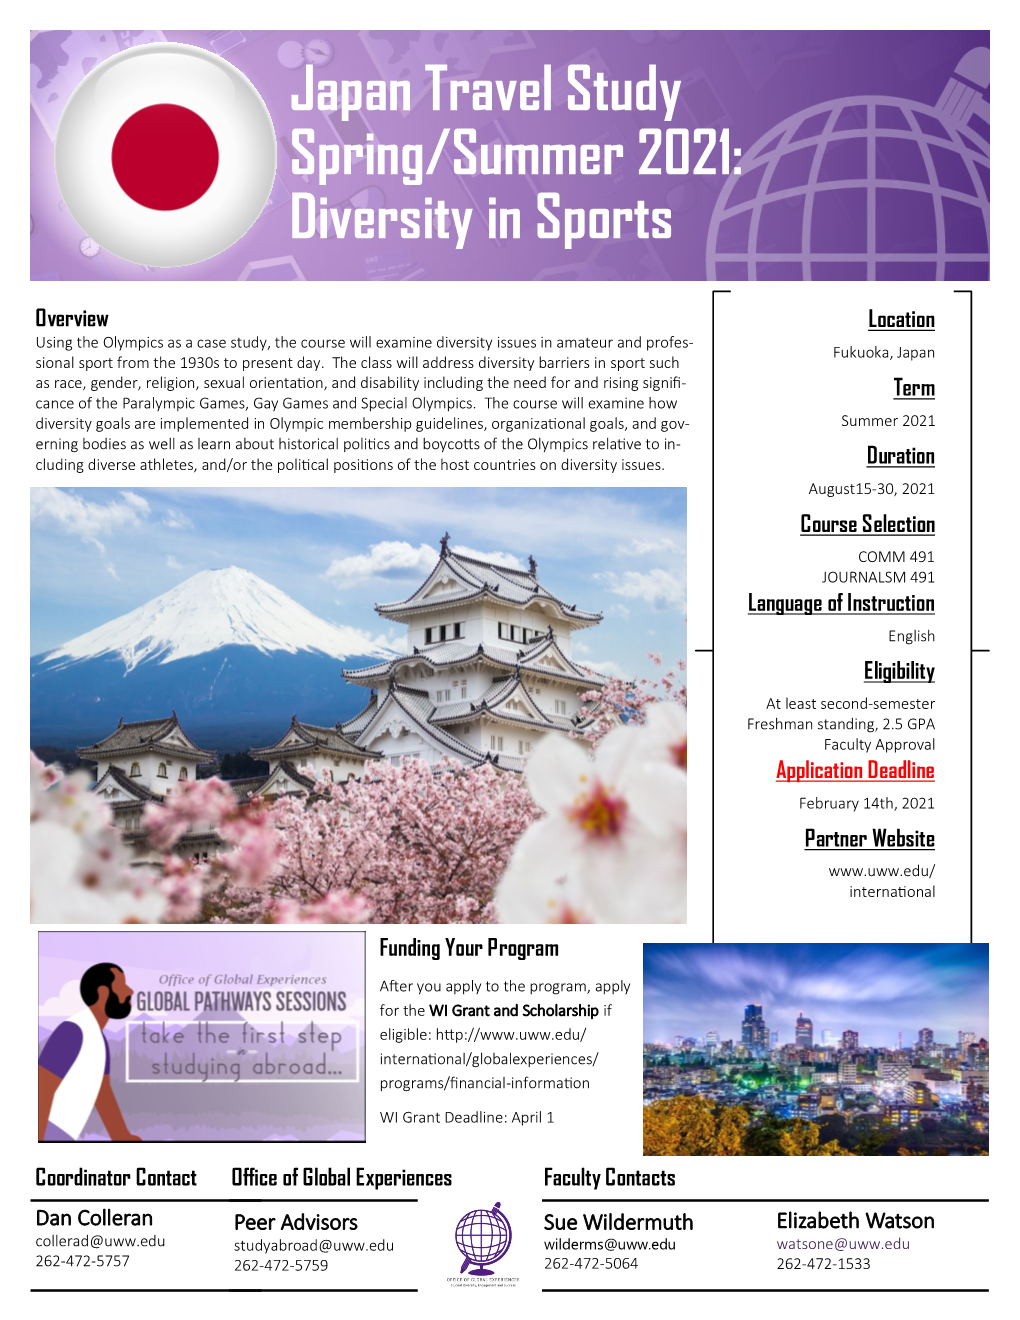 Japan Travel Study Spring/Summer 2021: Diversity in Sports